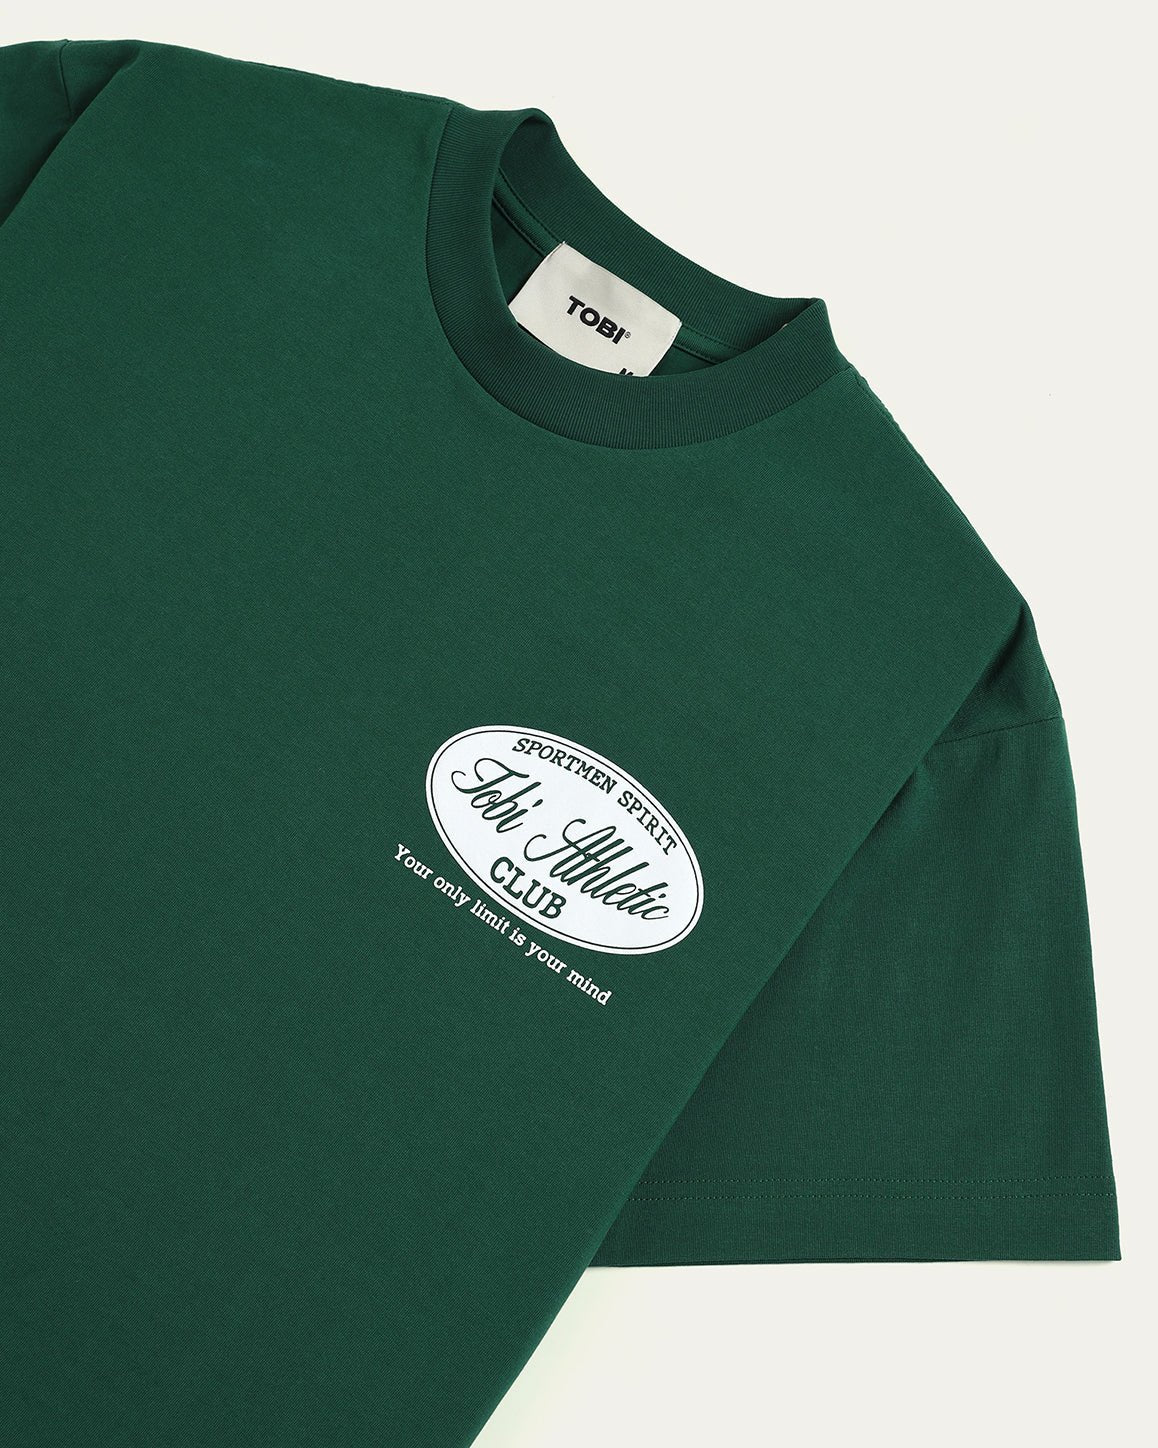 TOBI® Athletic Club T-shirt - Racing Green - TOBI